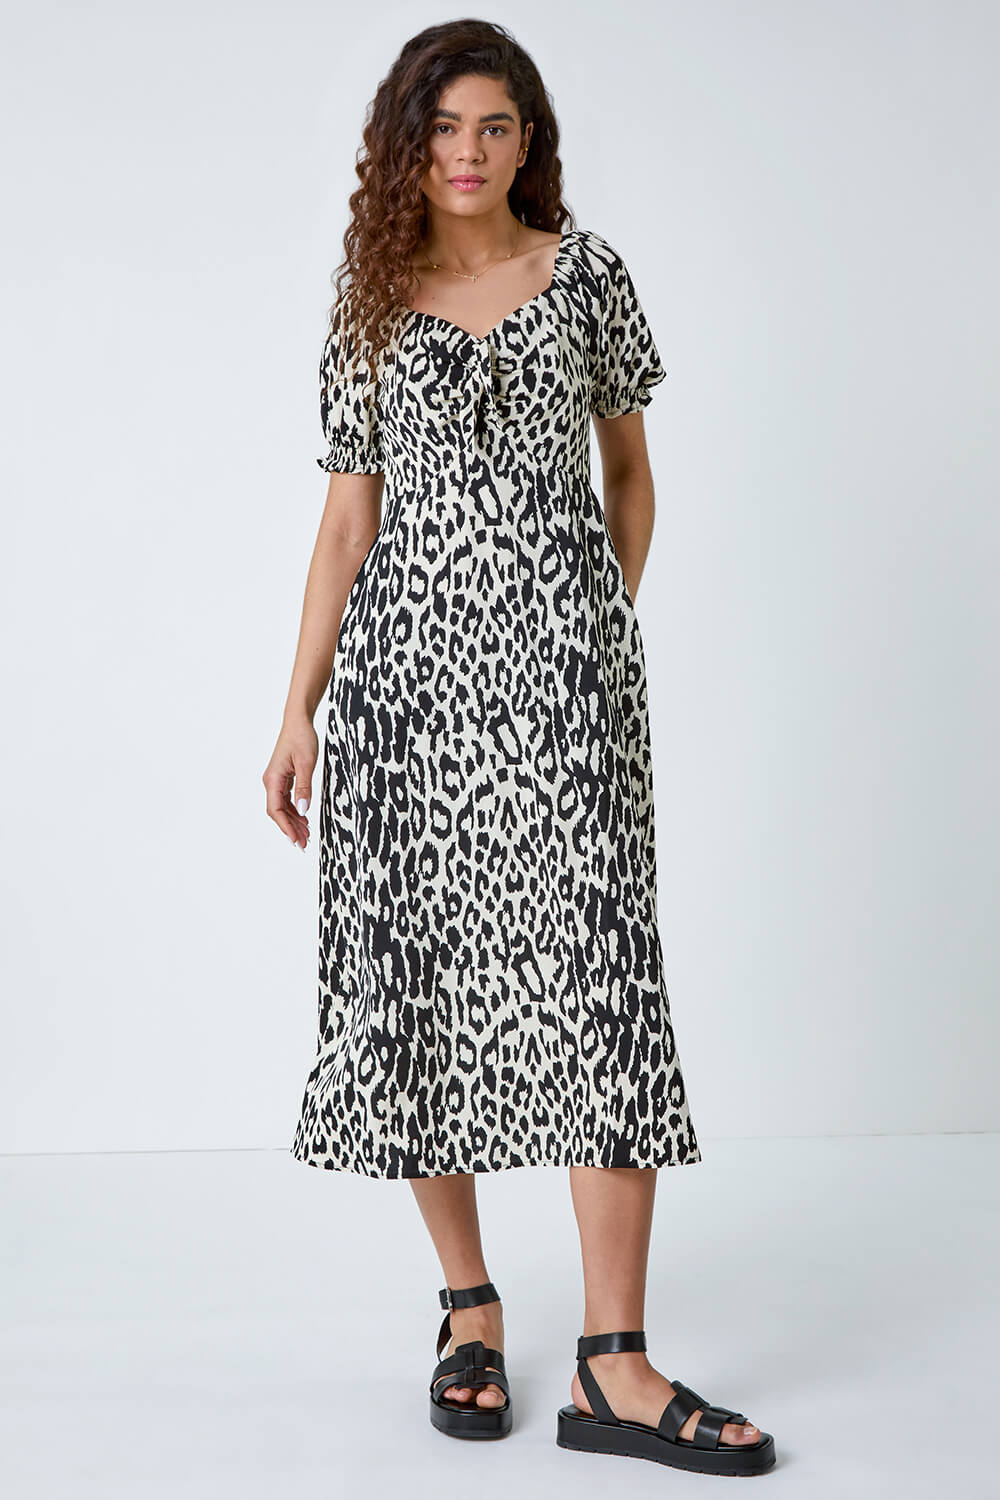 Black Leopard Print Ruched Pocket Midi Dress, Image 2 of 6